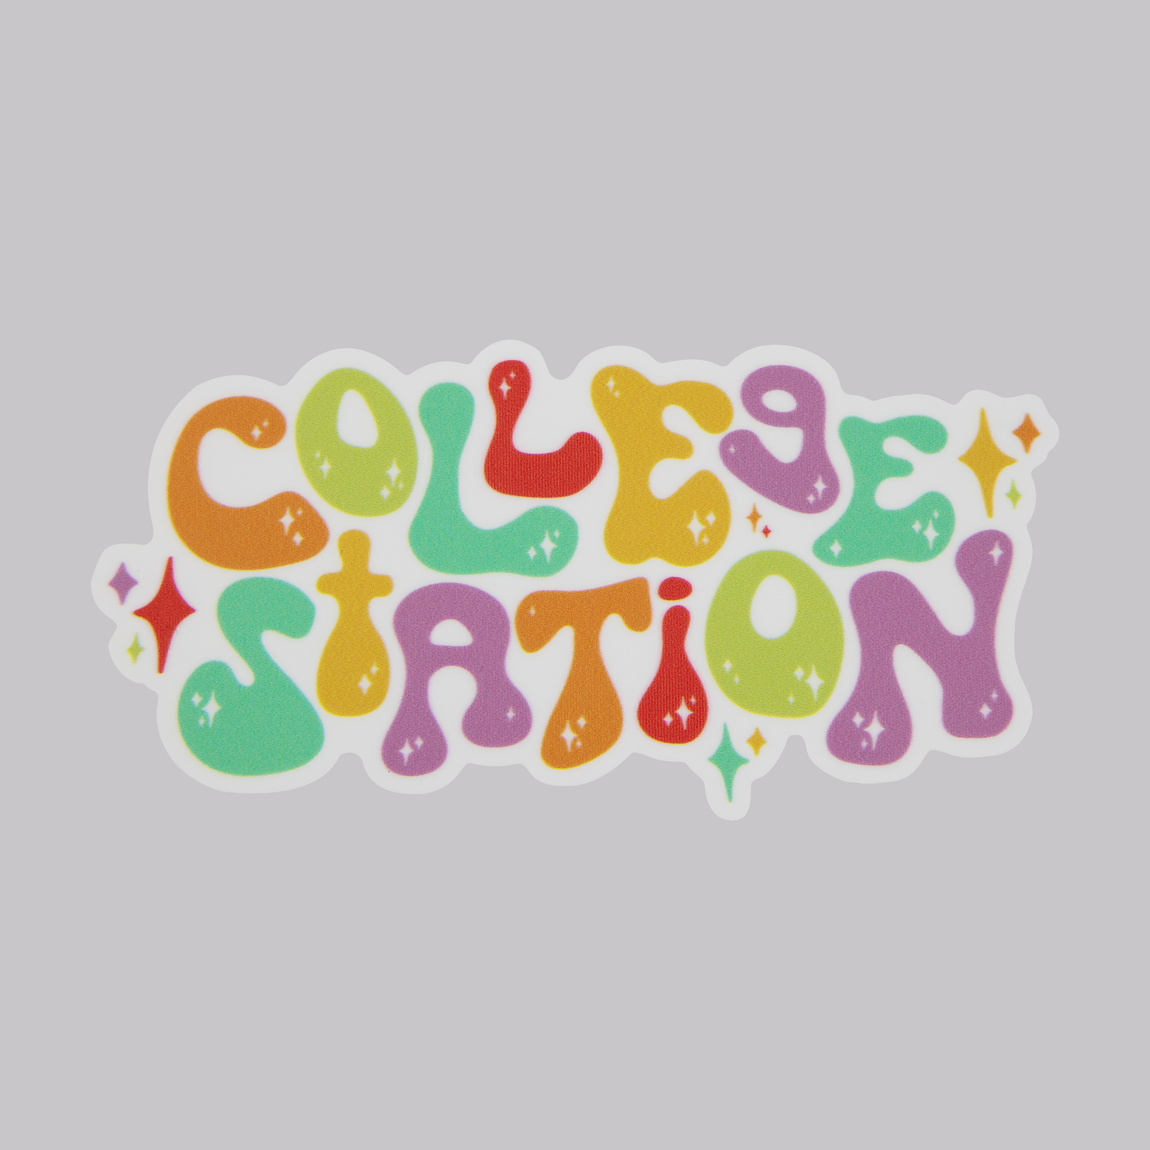 Colorful College Station Dizzler